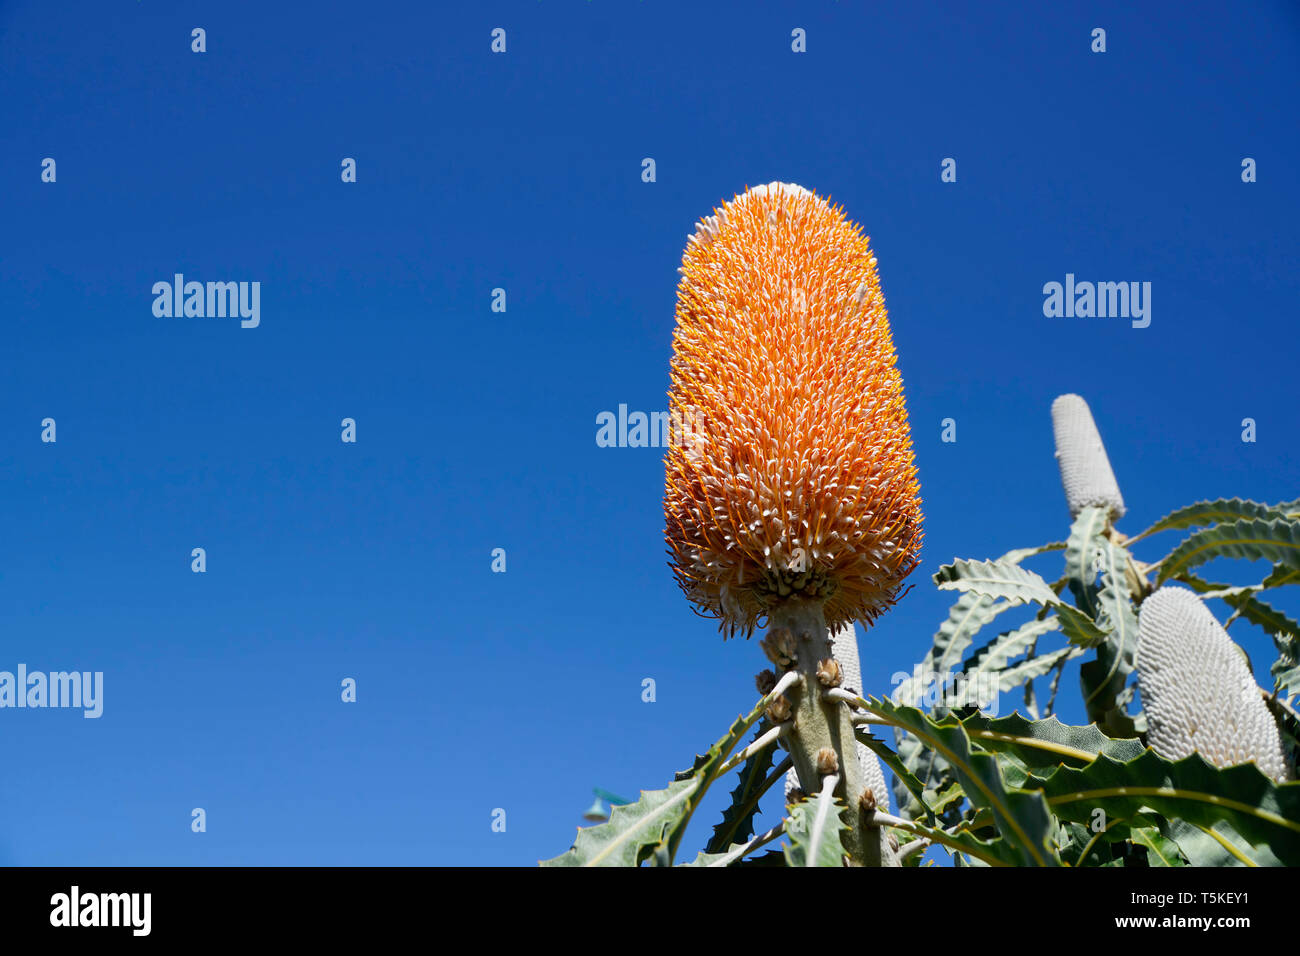 Australia native flower orange Banksia and blue sky background. Copy space Stock Photo